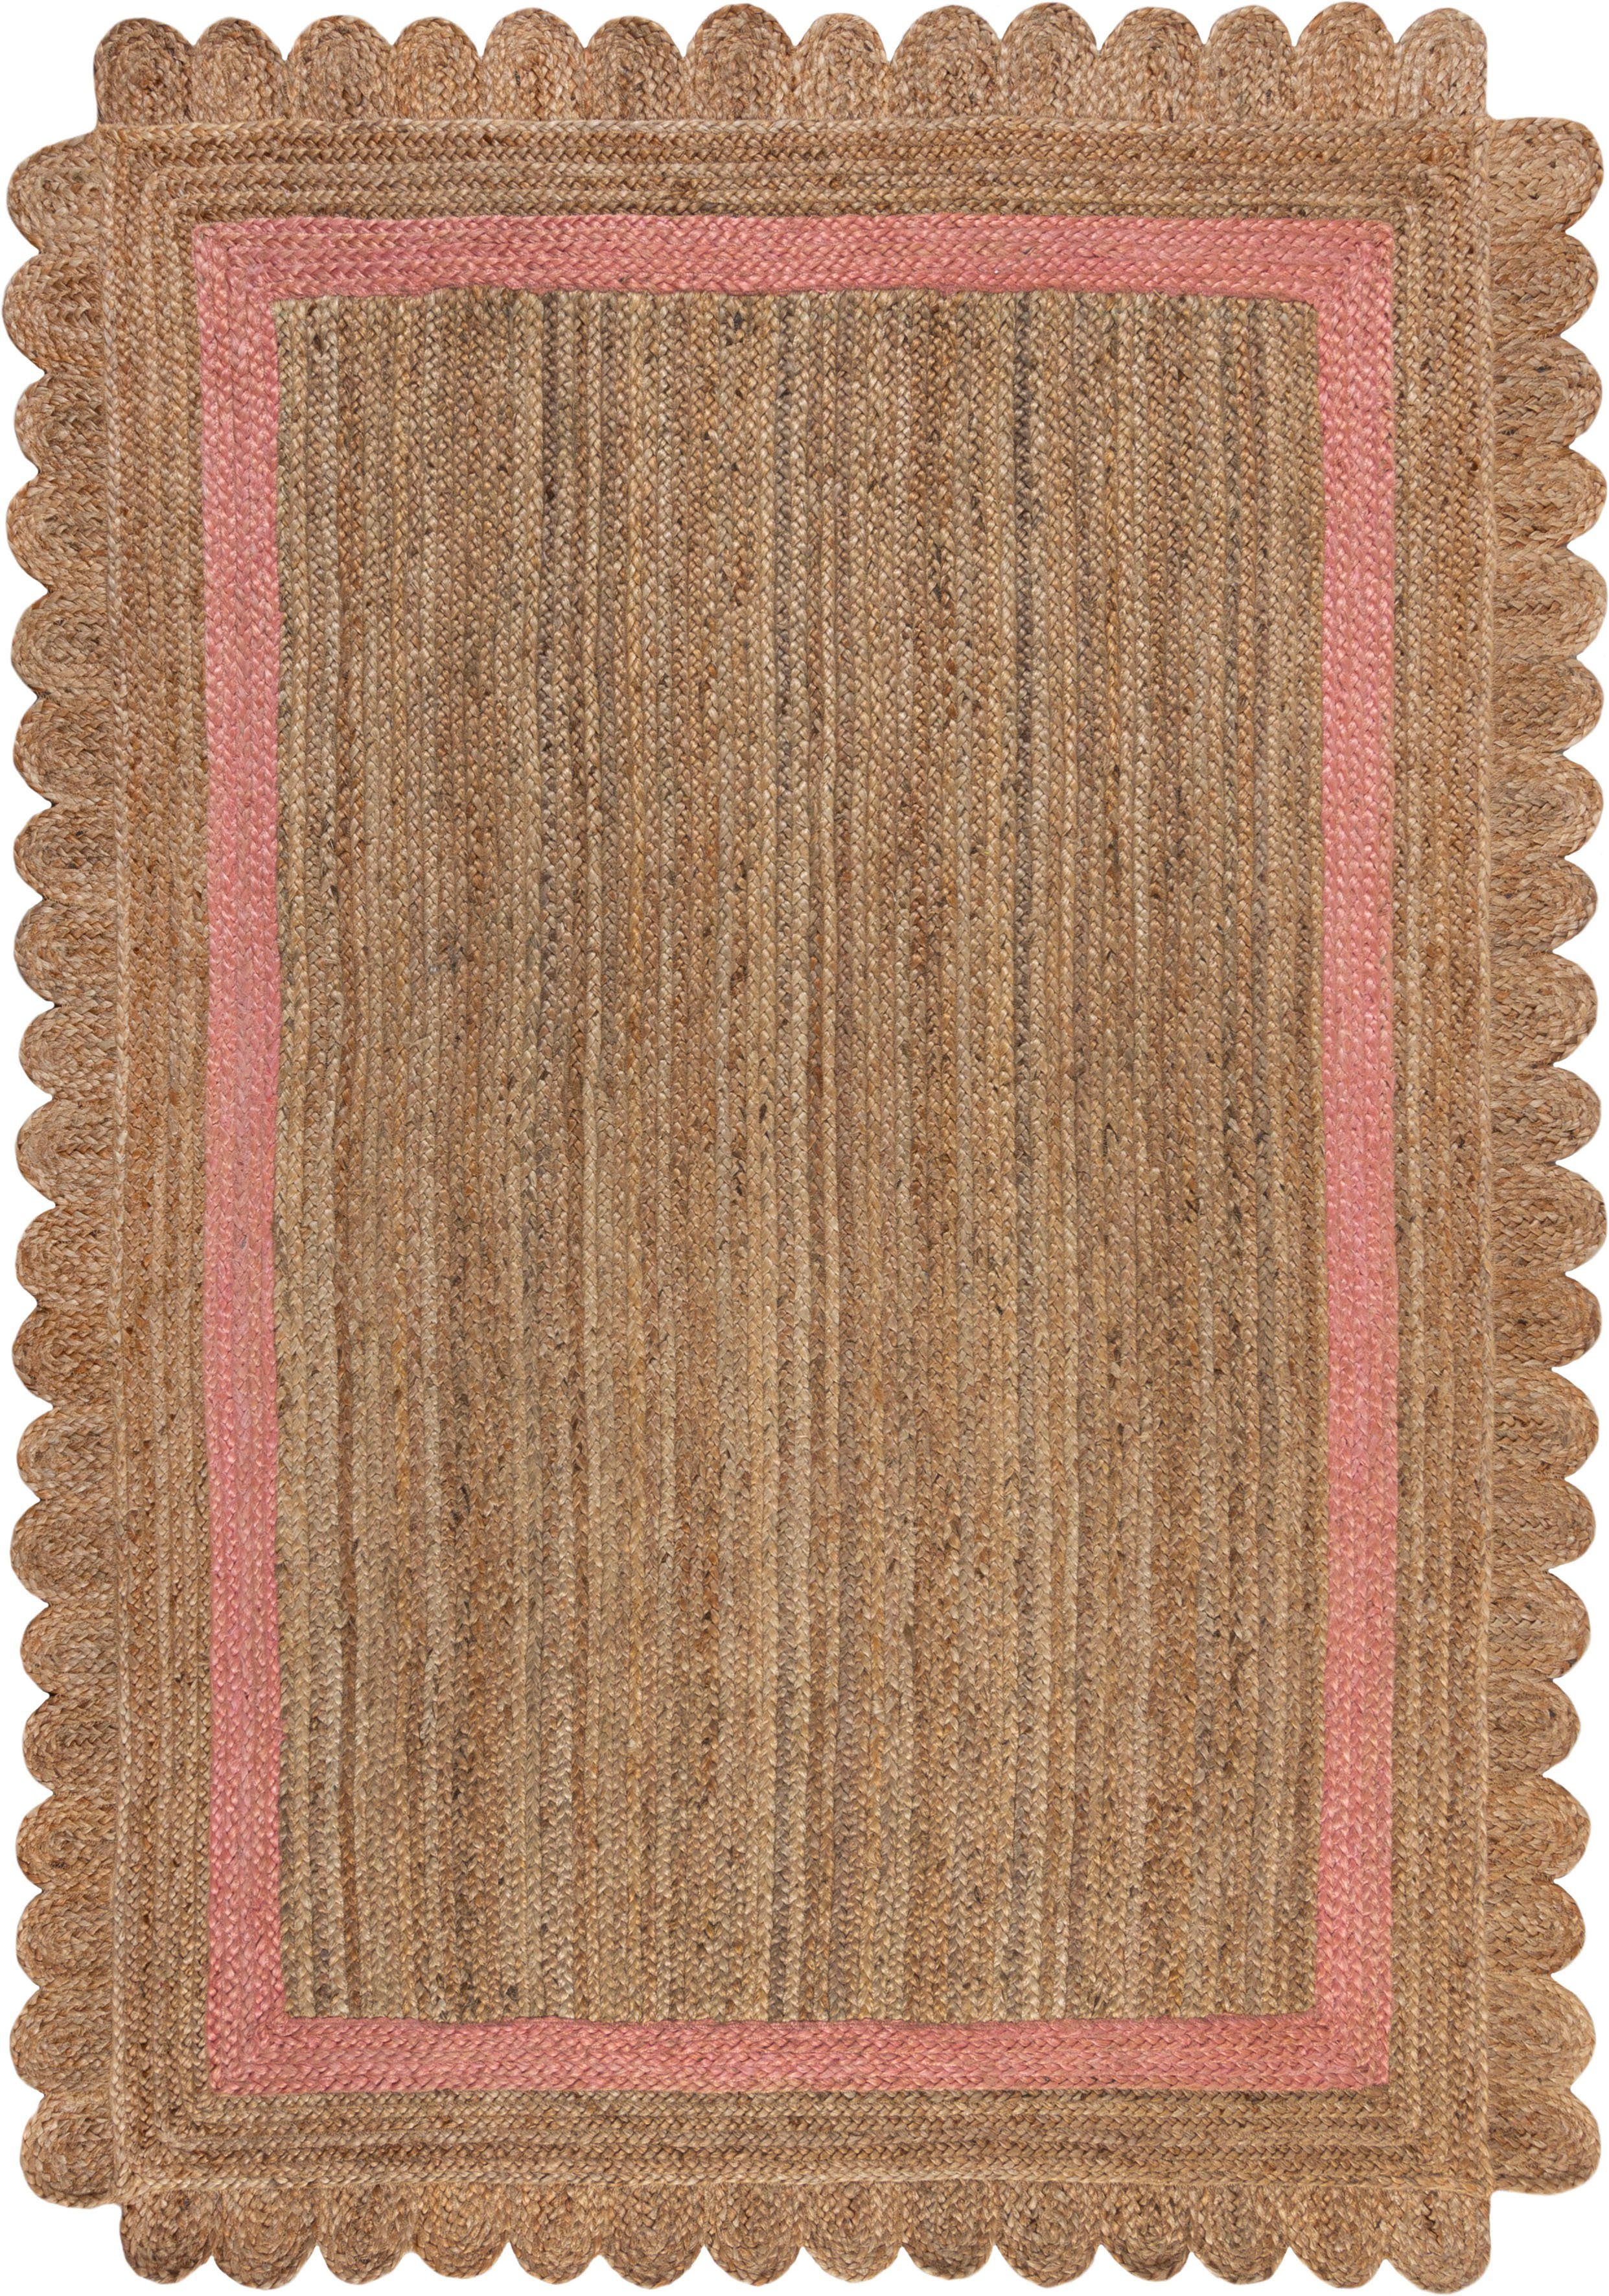 Teppich Grace, FLAIR RUGS, rechteckig, Höhe: 7 mm, aus 100% Jute, fußbodenheizungsgeeignet, mit Bordüre natur/pink | Kurzflor-Teppiche